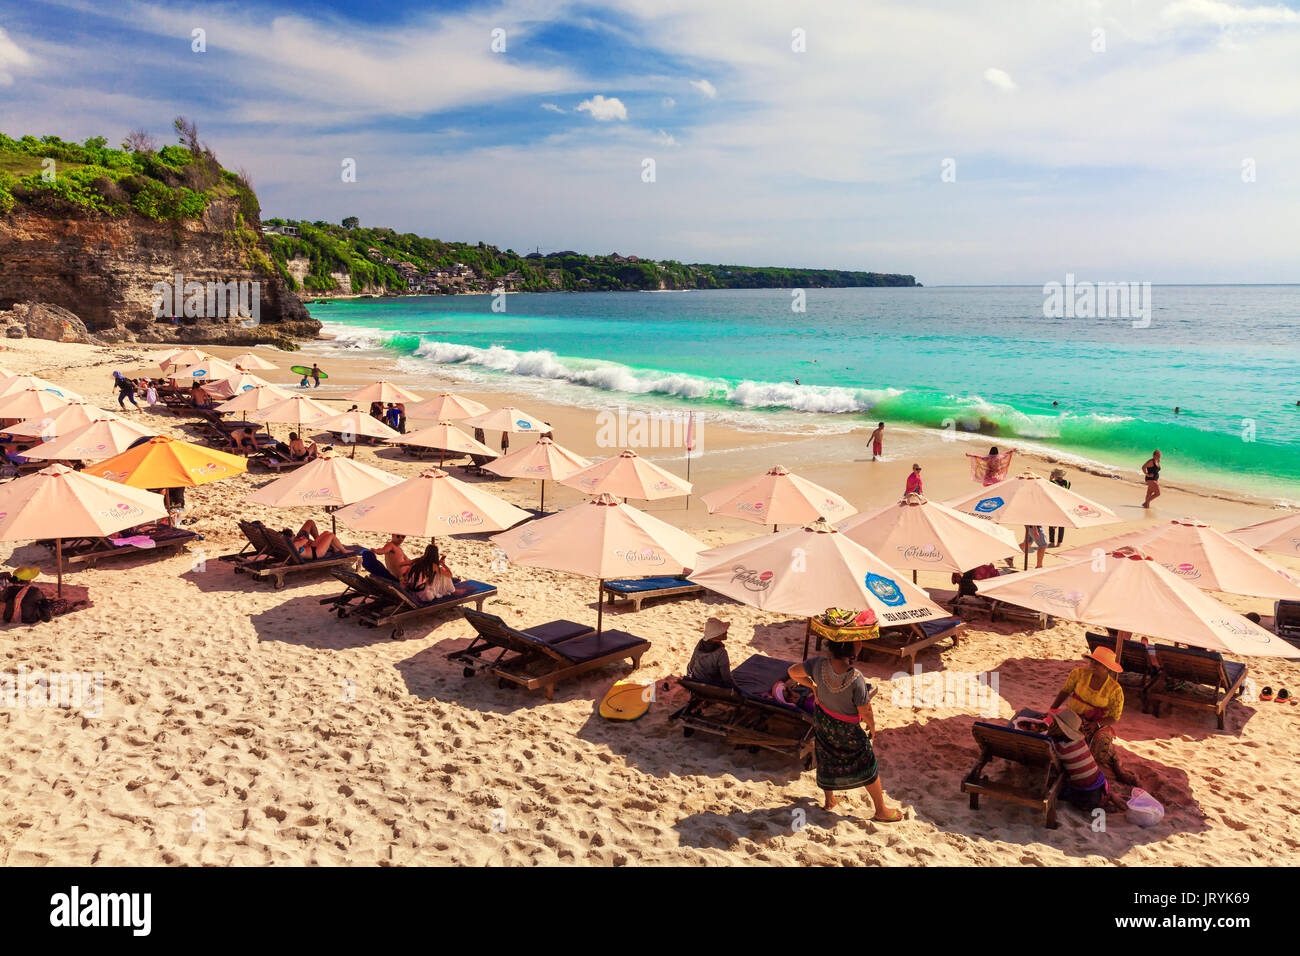 Pantai Dreamland Beach South Kuta / Tropical beach island Bali / Indonesia,  Bali Stock Photo - Alamy